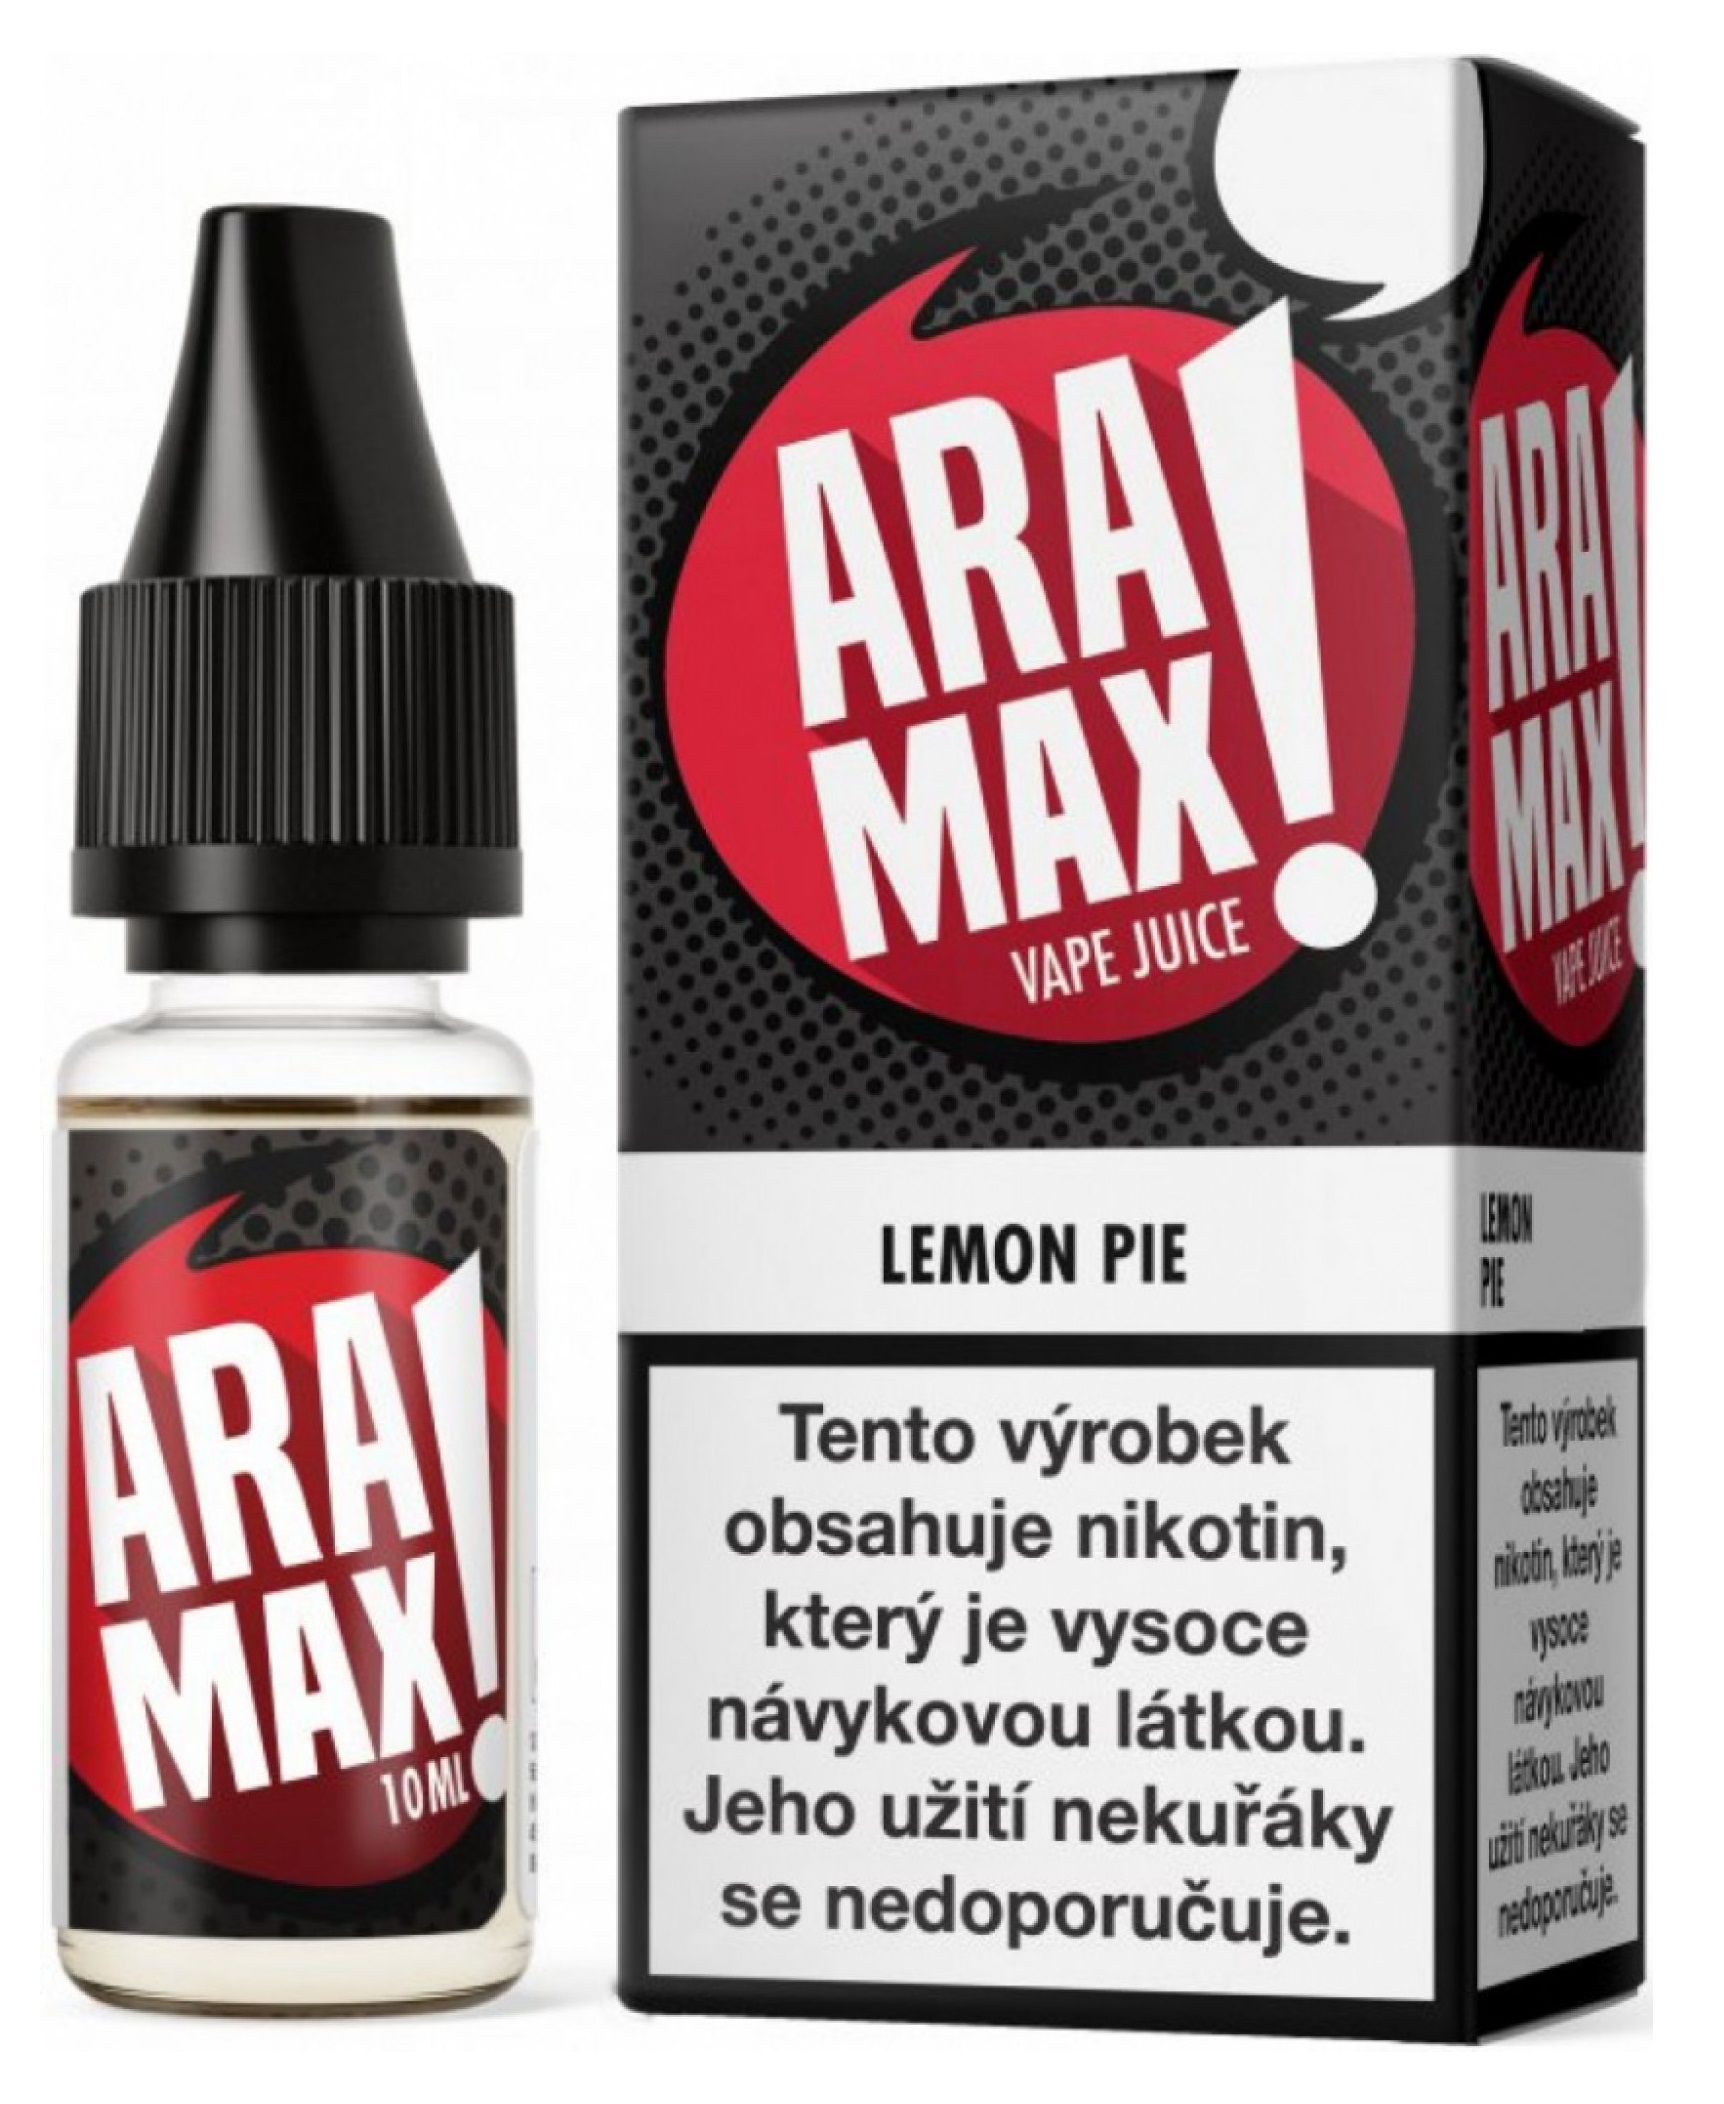 ARAMAX Lemon Pie 10ml Množství nikotinu: 12mg